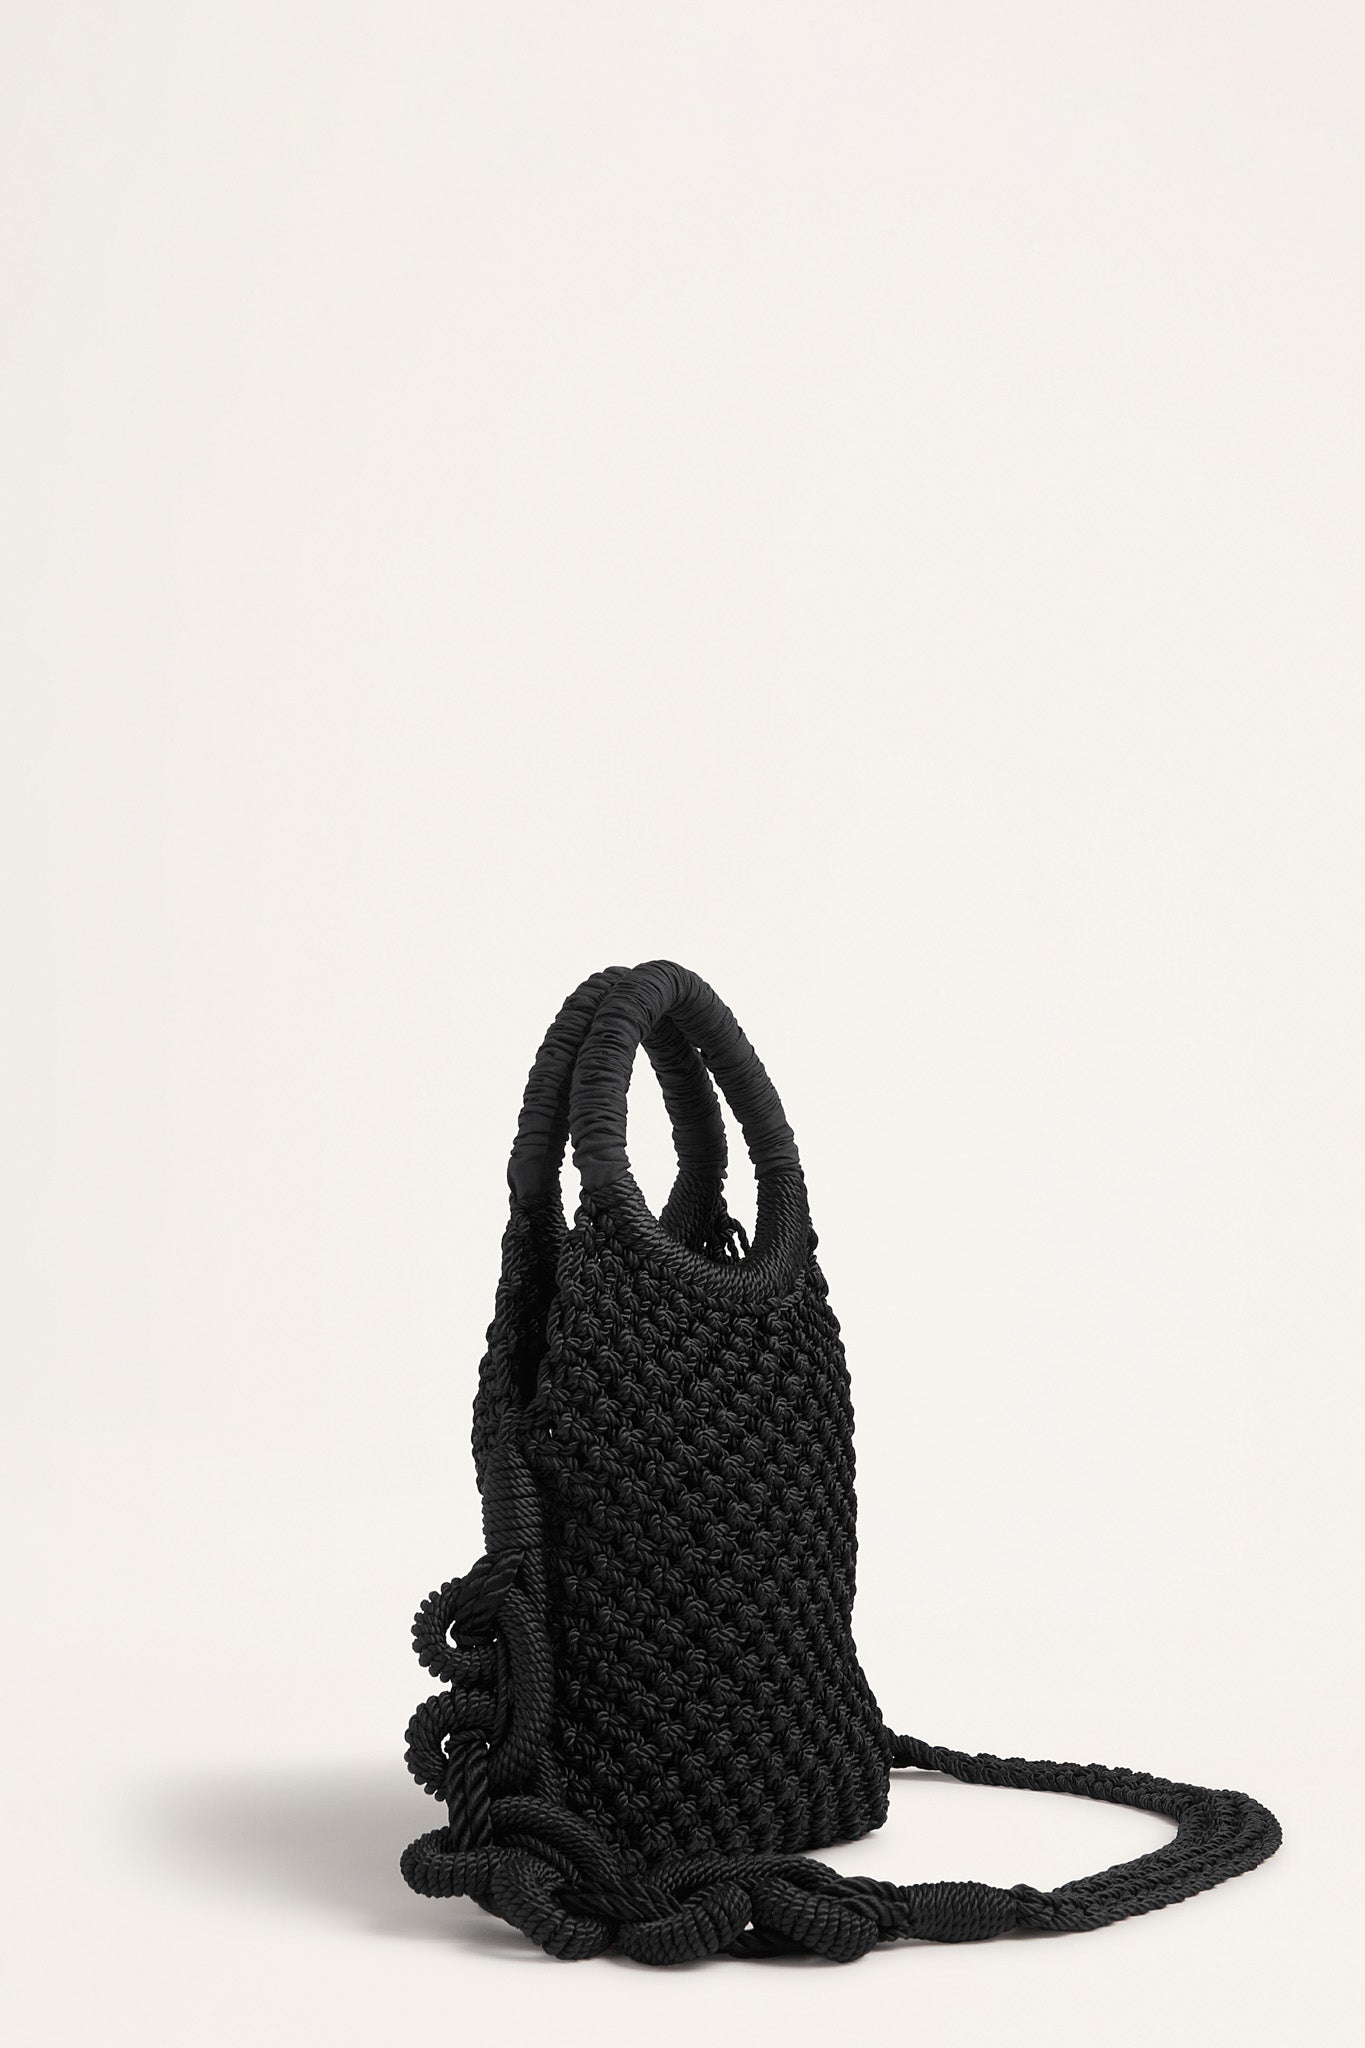 Maris Strap Bag in Black